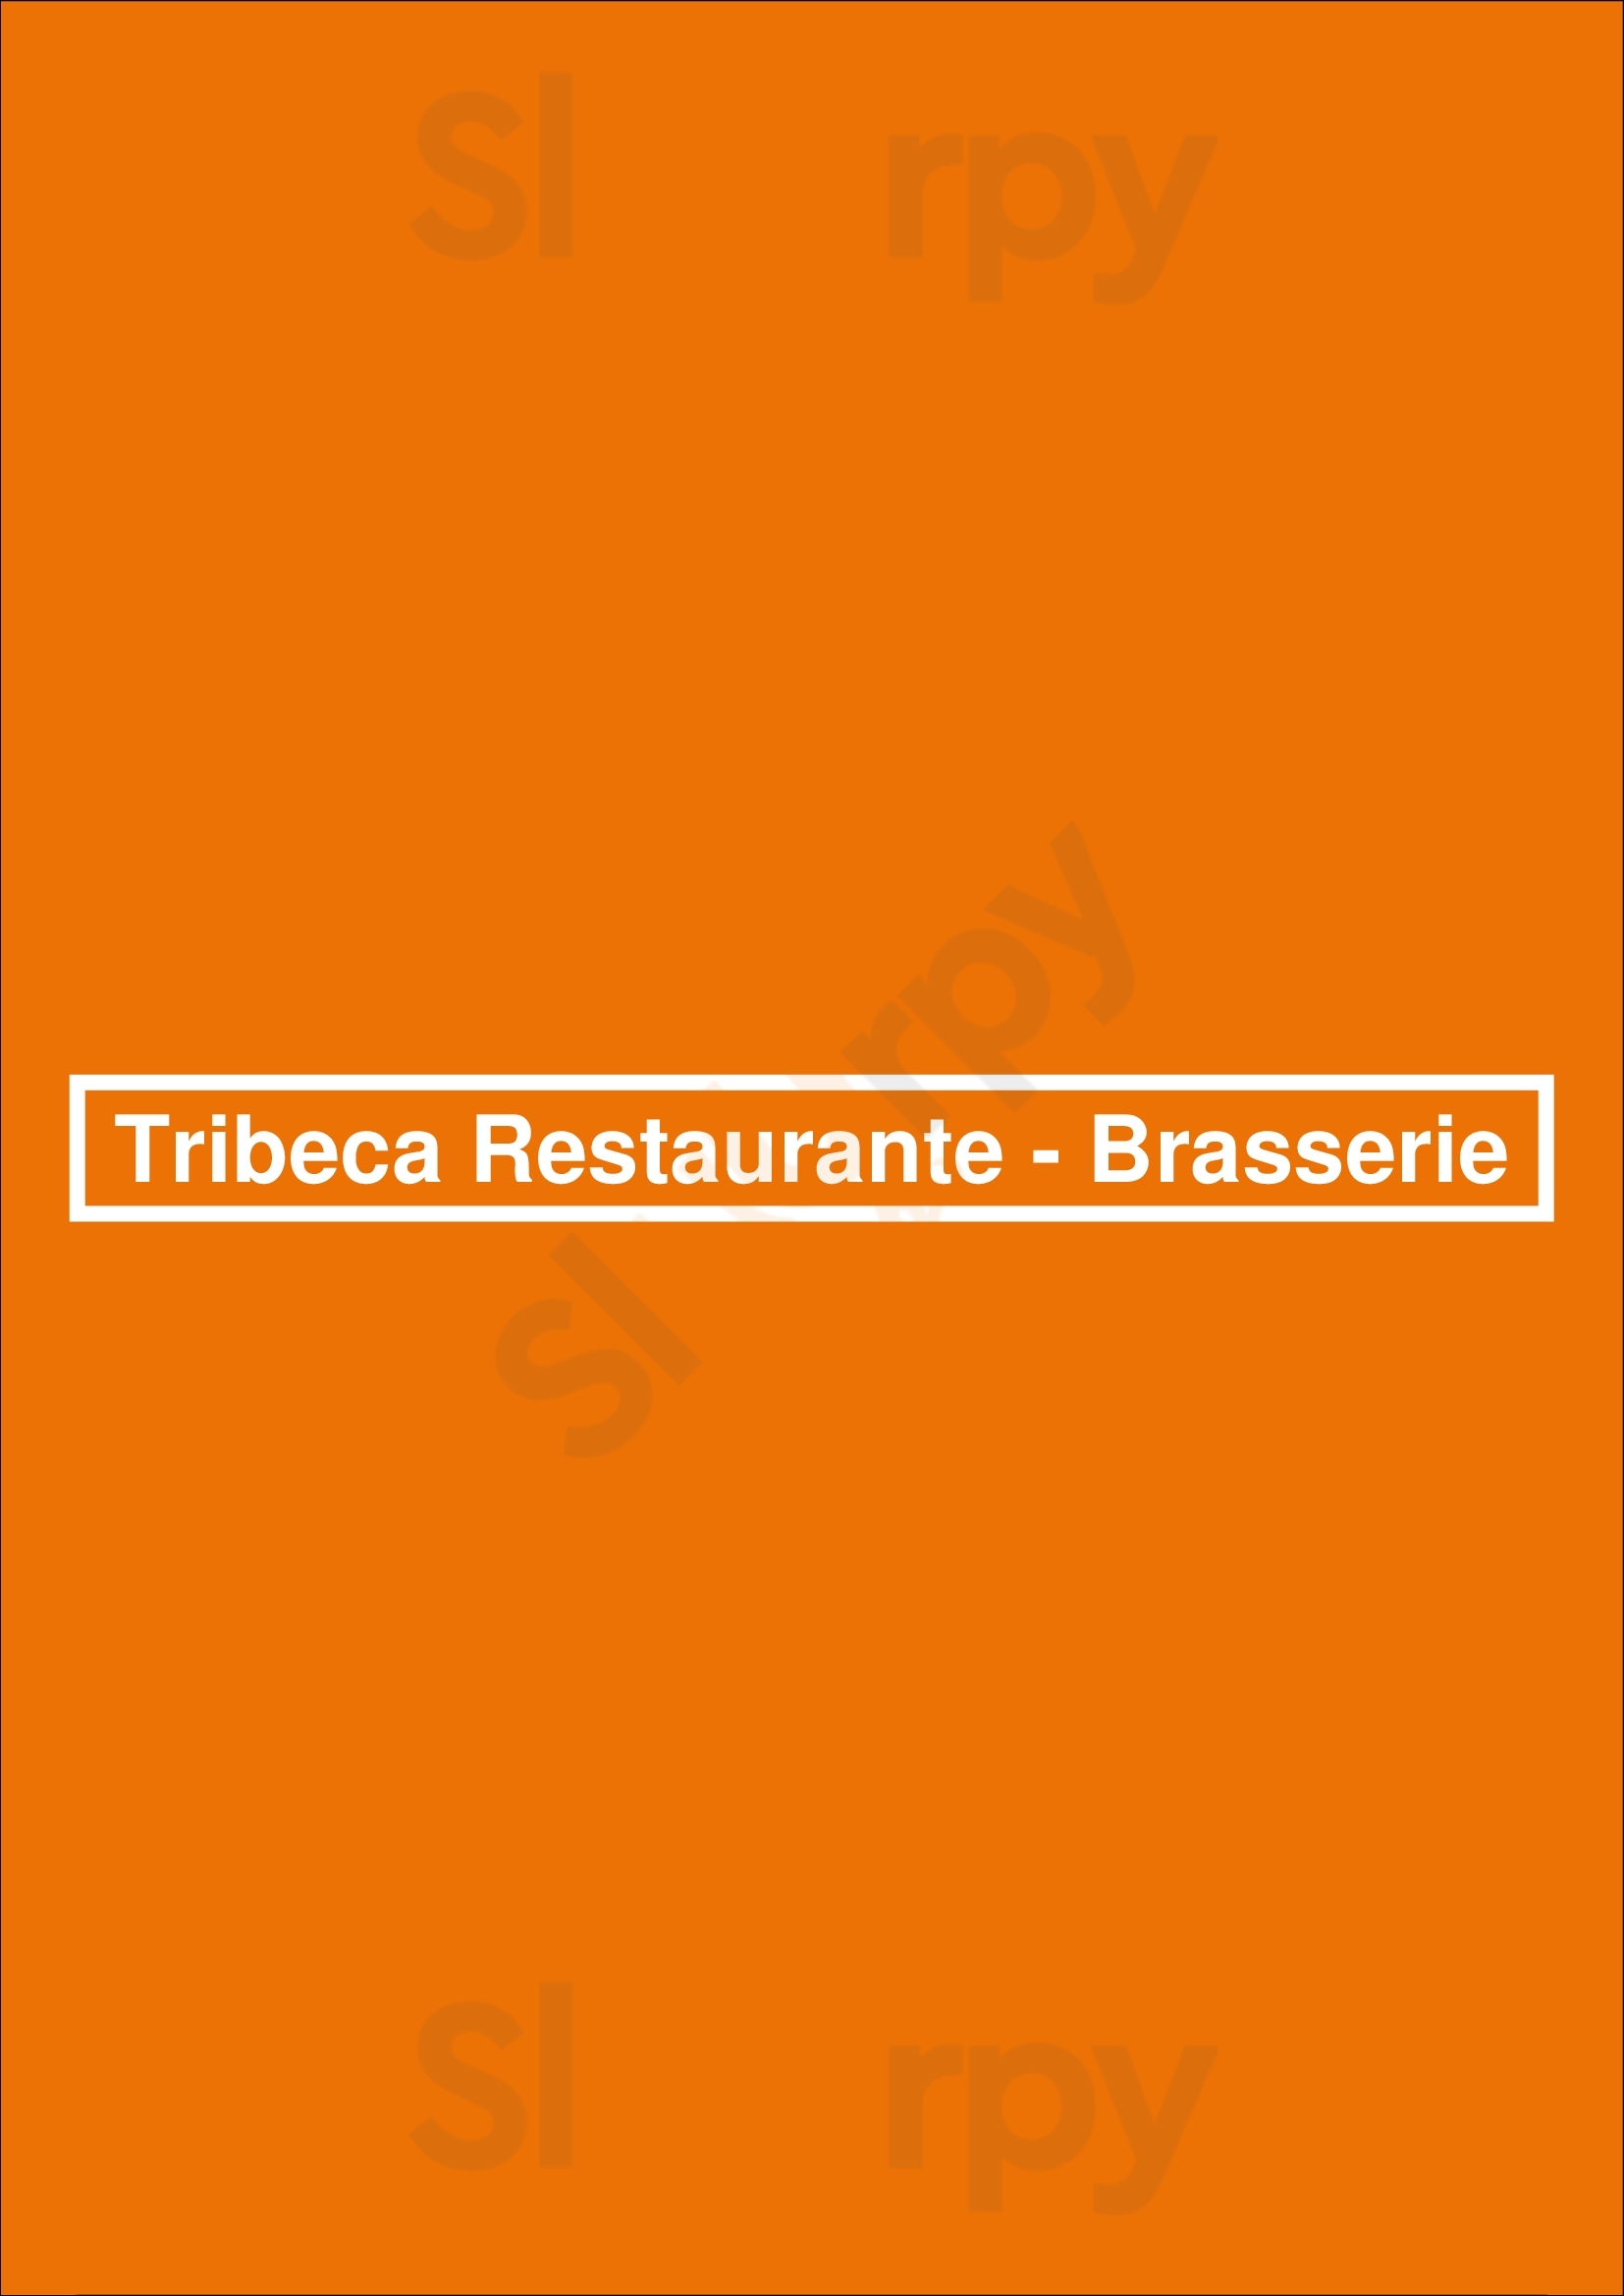 Tribeca Restaurante - Brasserie Serra d'El Rei Menu - 1